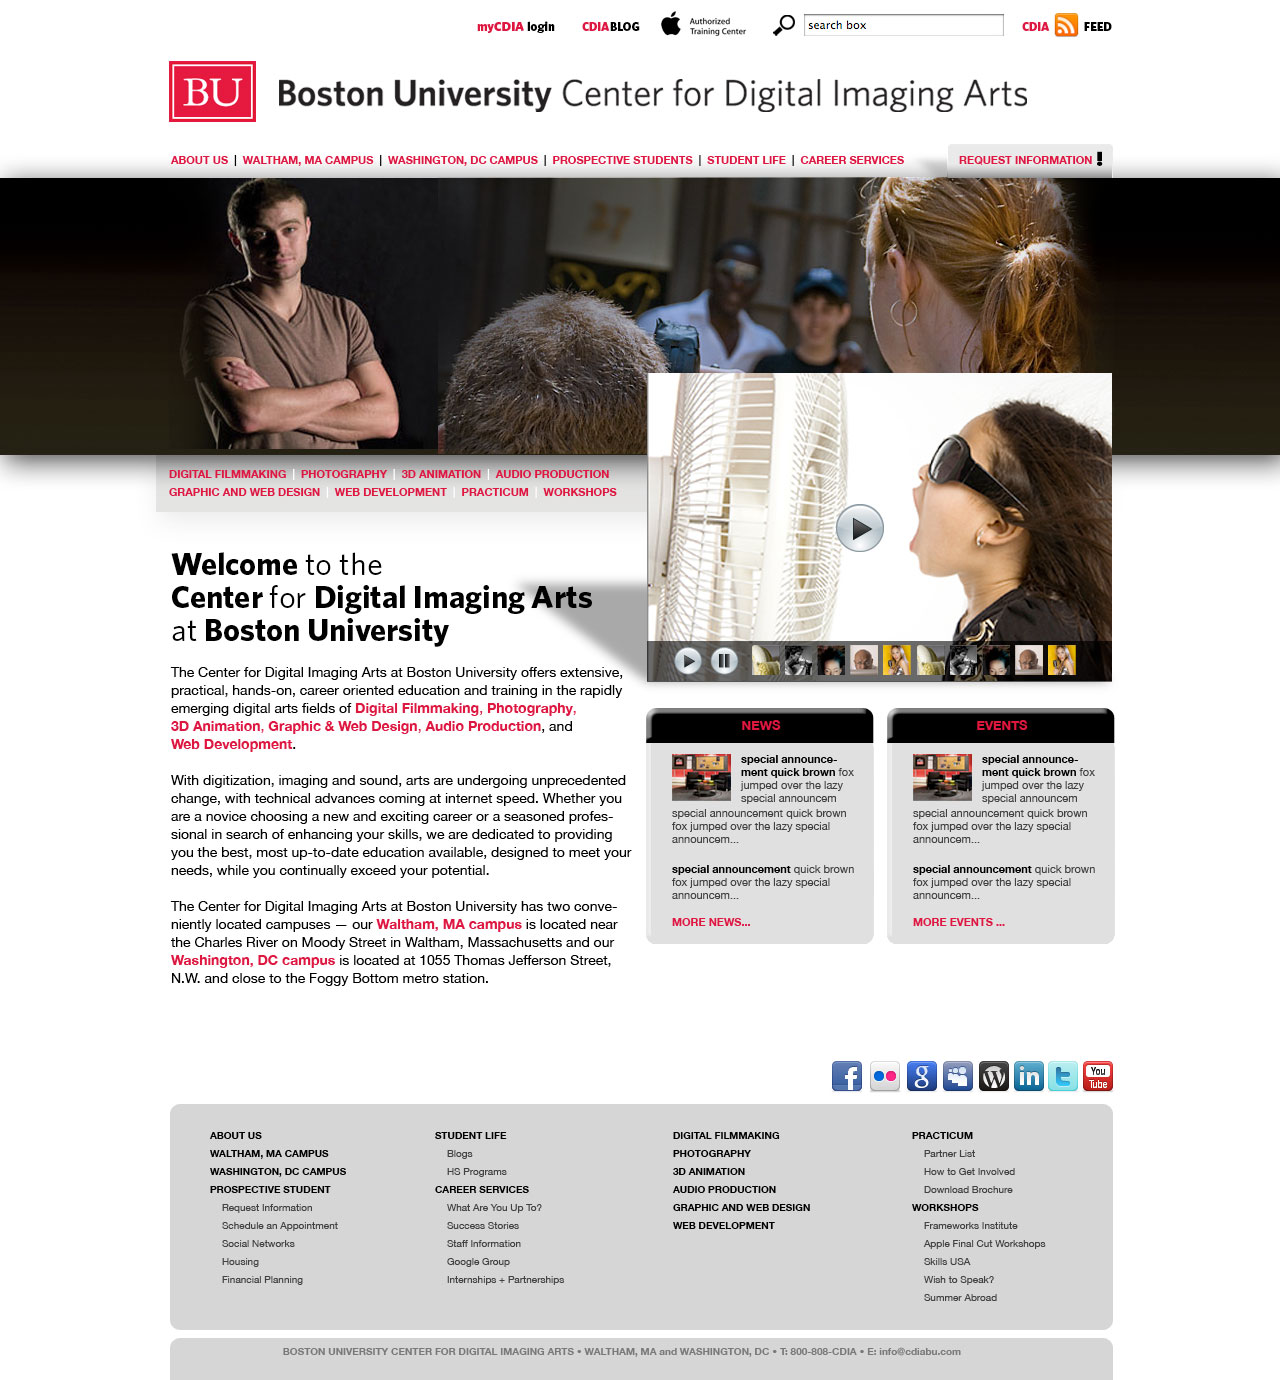 Boston University Center for Digital Imaging Arts web design design 4 image with white background